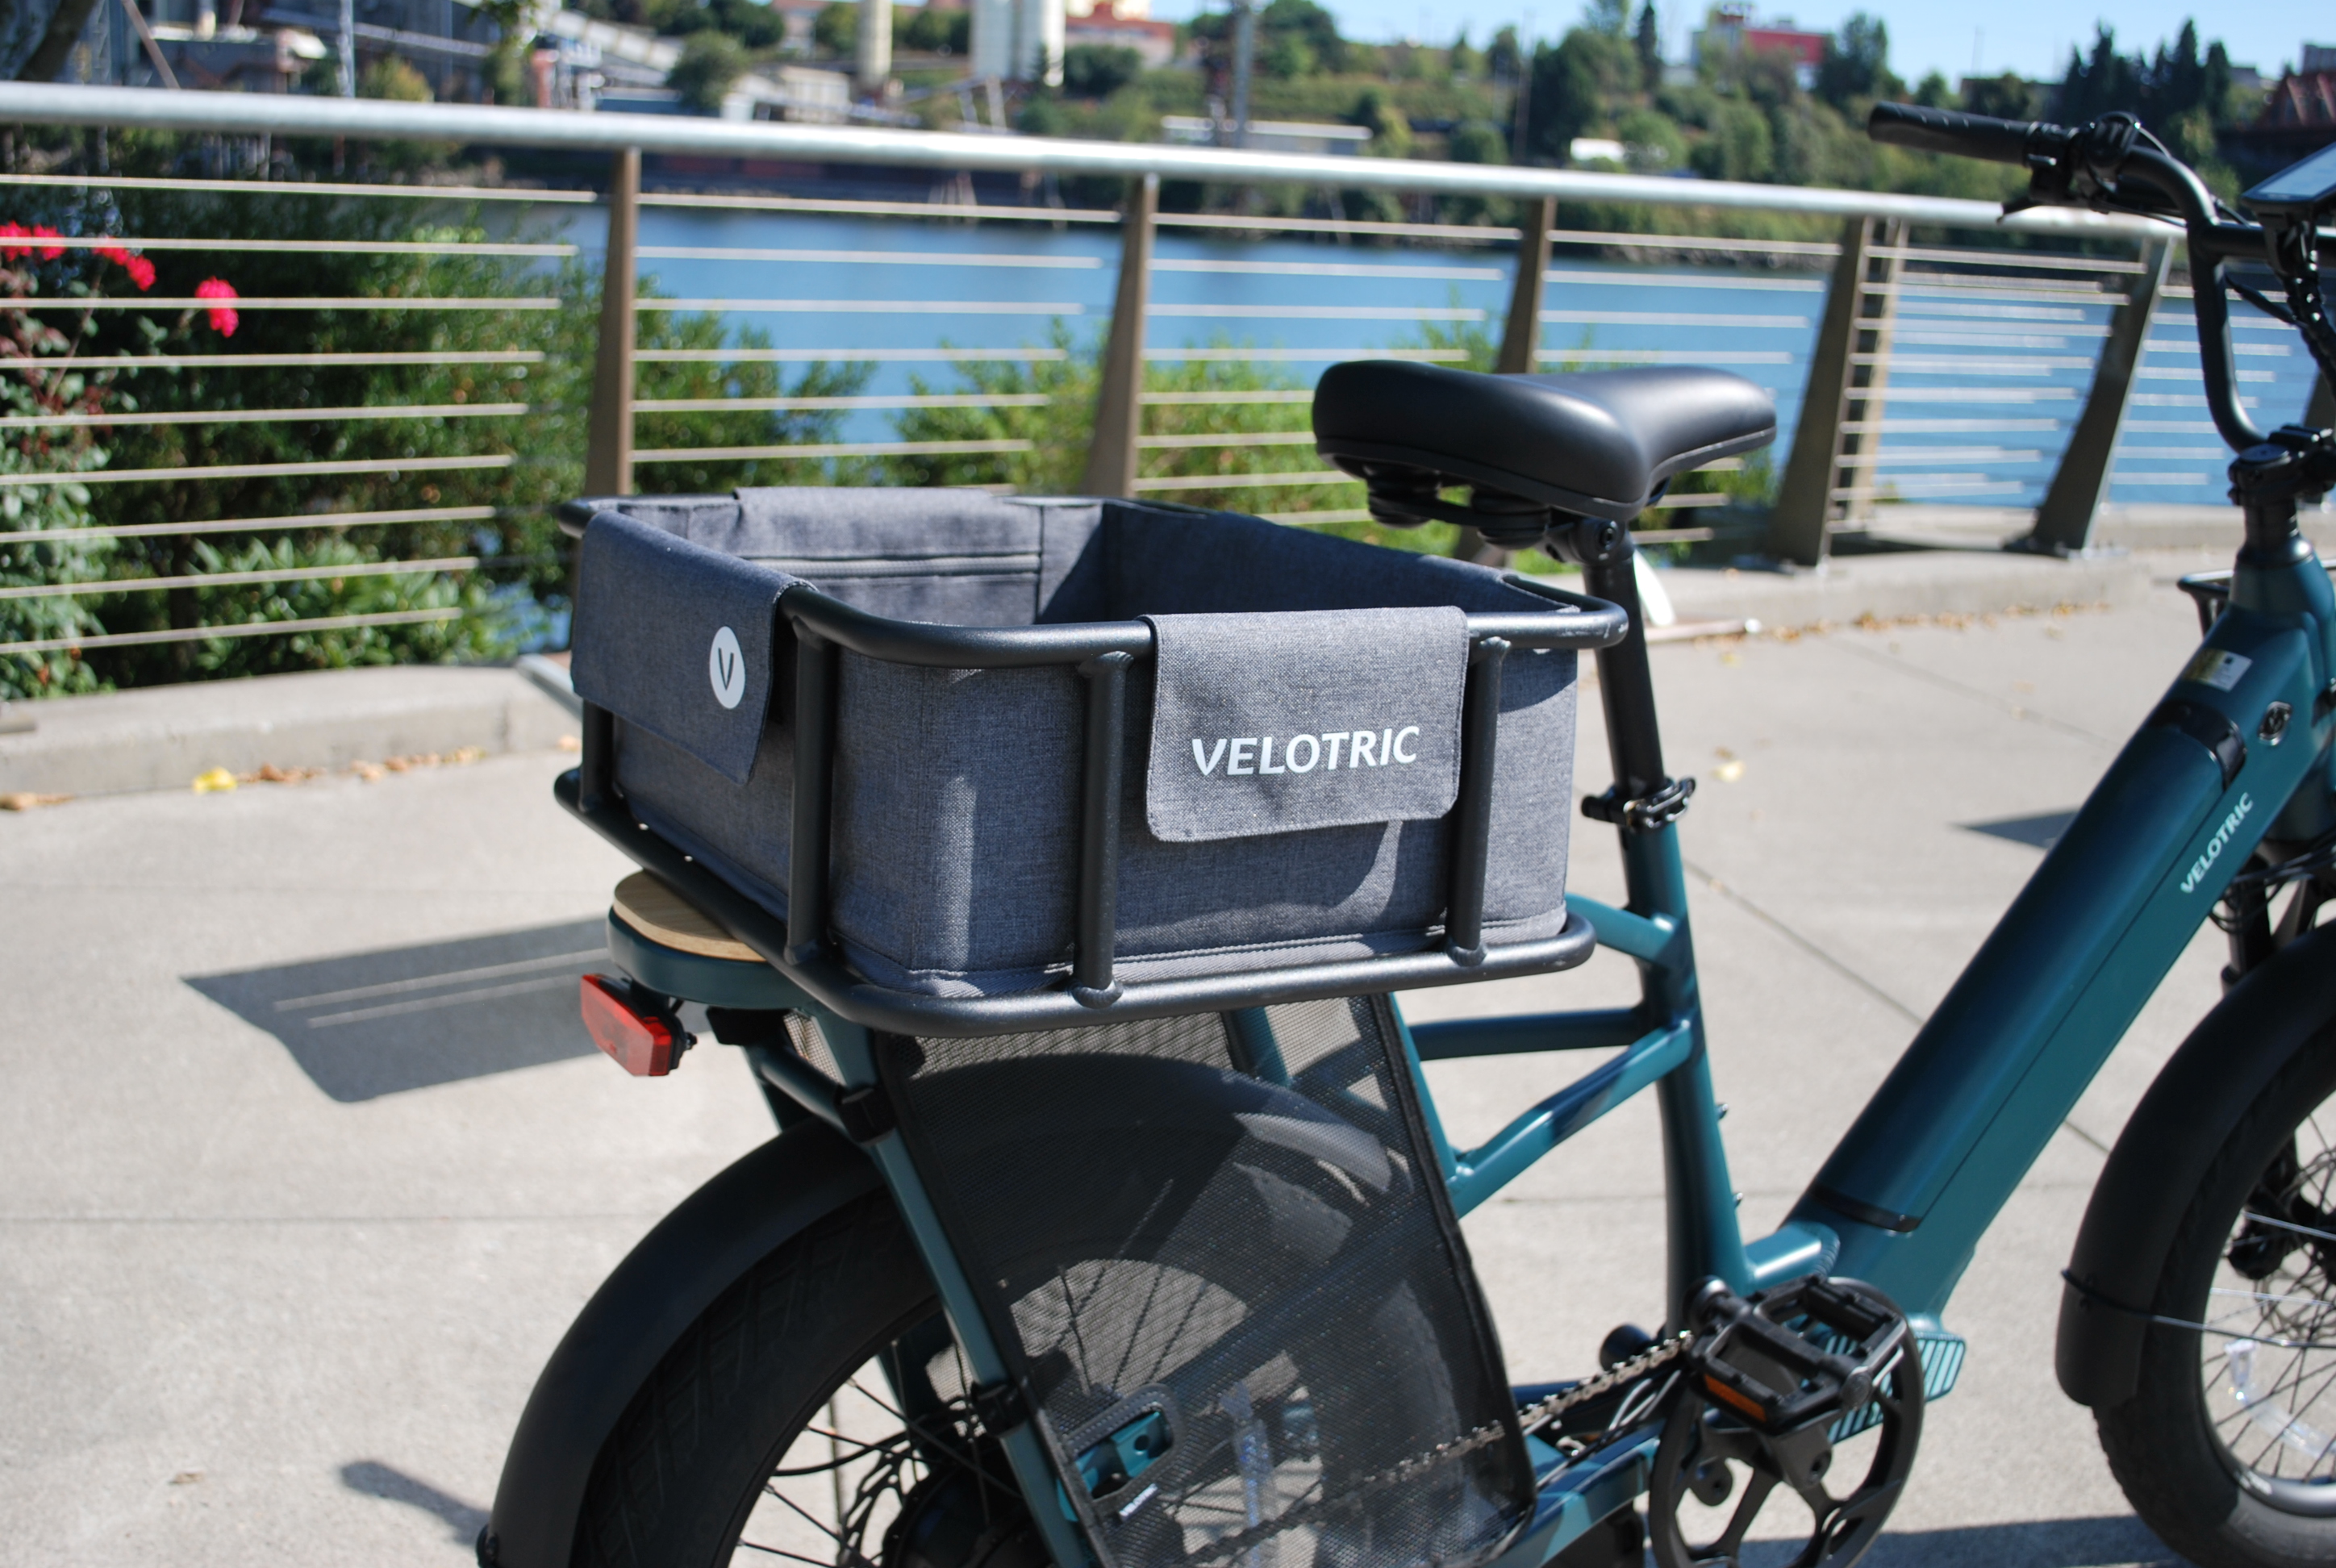 Velotric Go 1 e-cargo bike